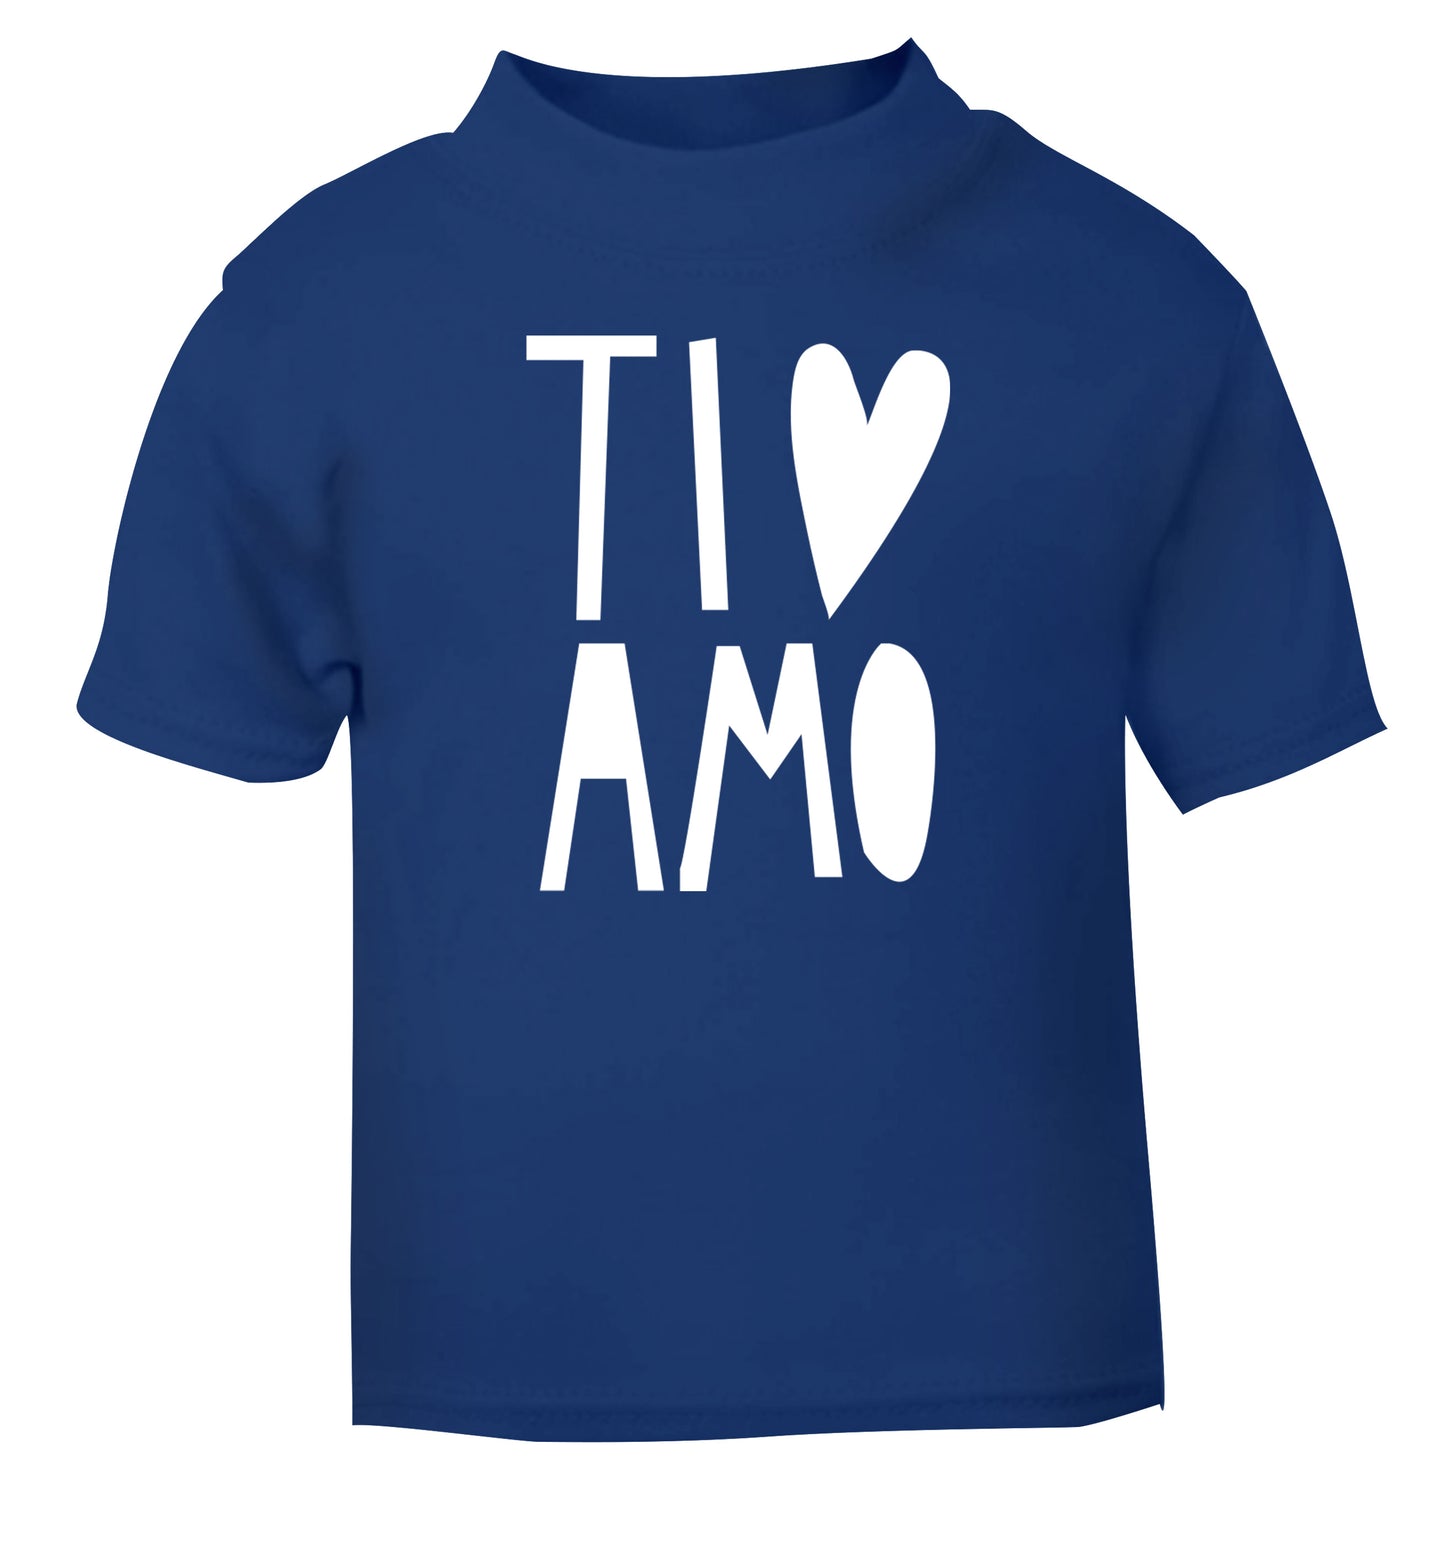 Ti amo - I love you blue Baby Toddler Tshirt 2 Years